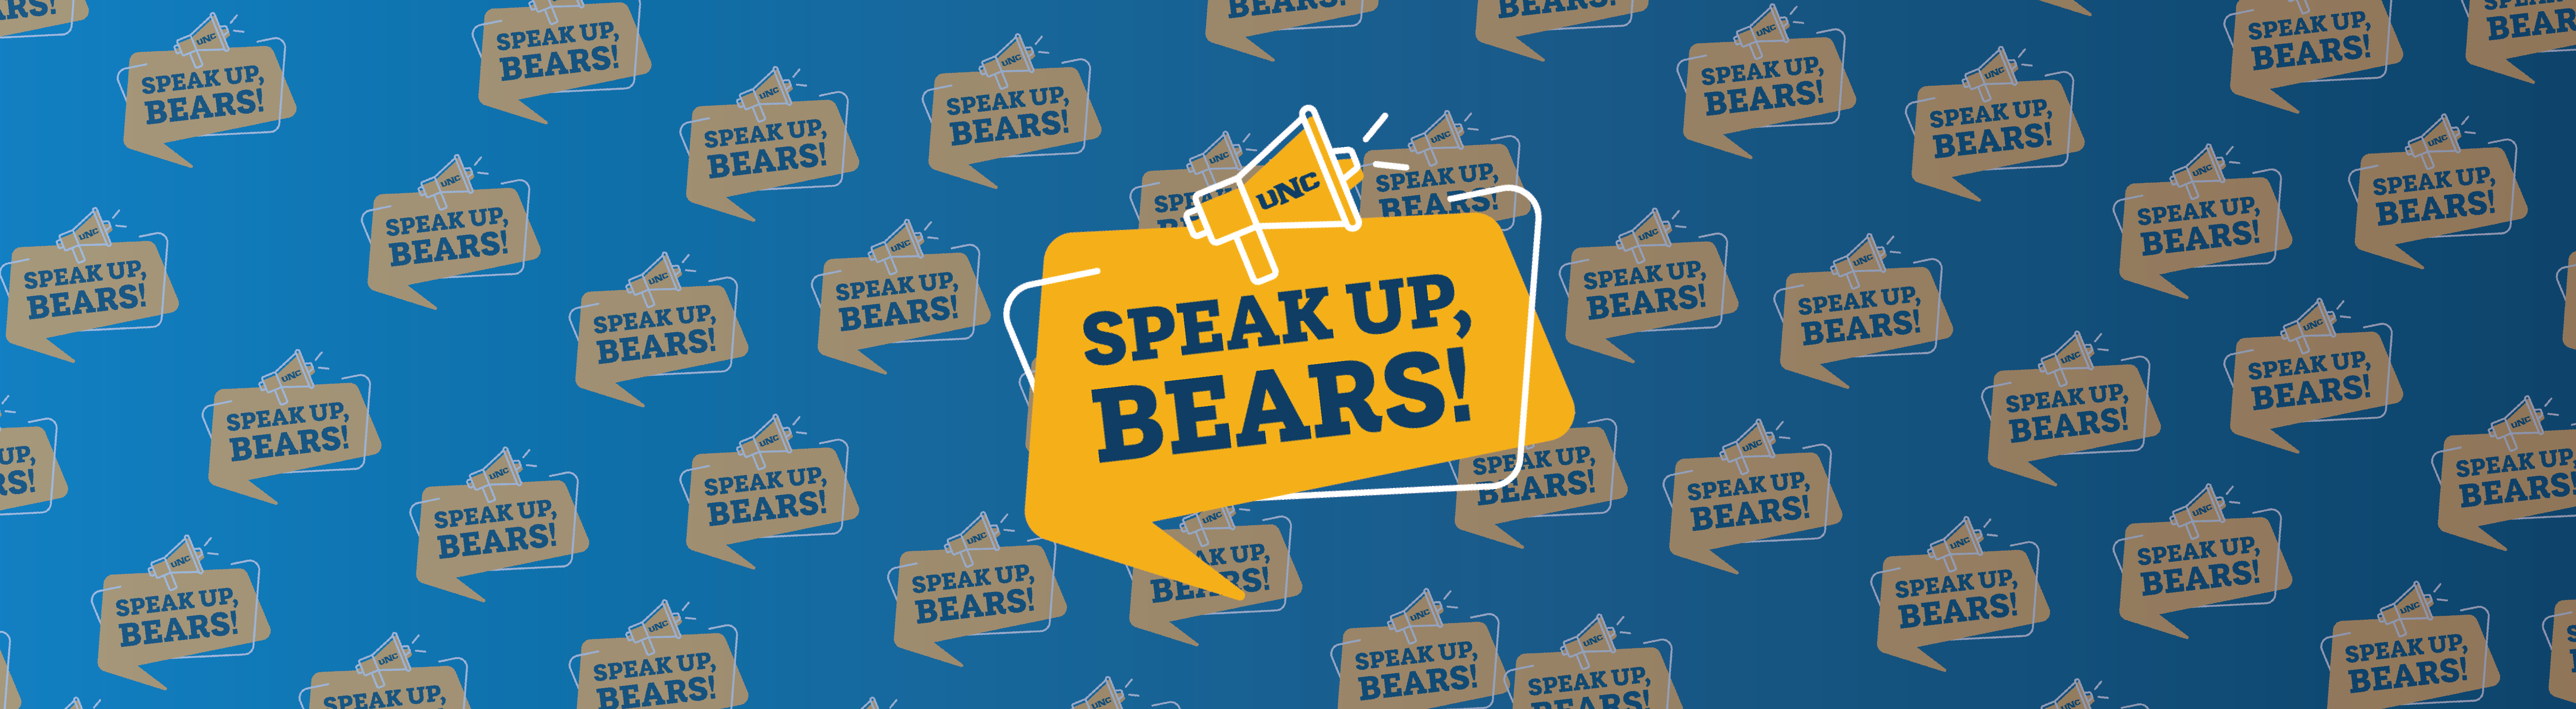 unc speak up bears banner